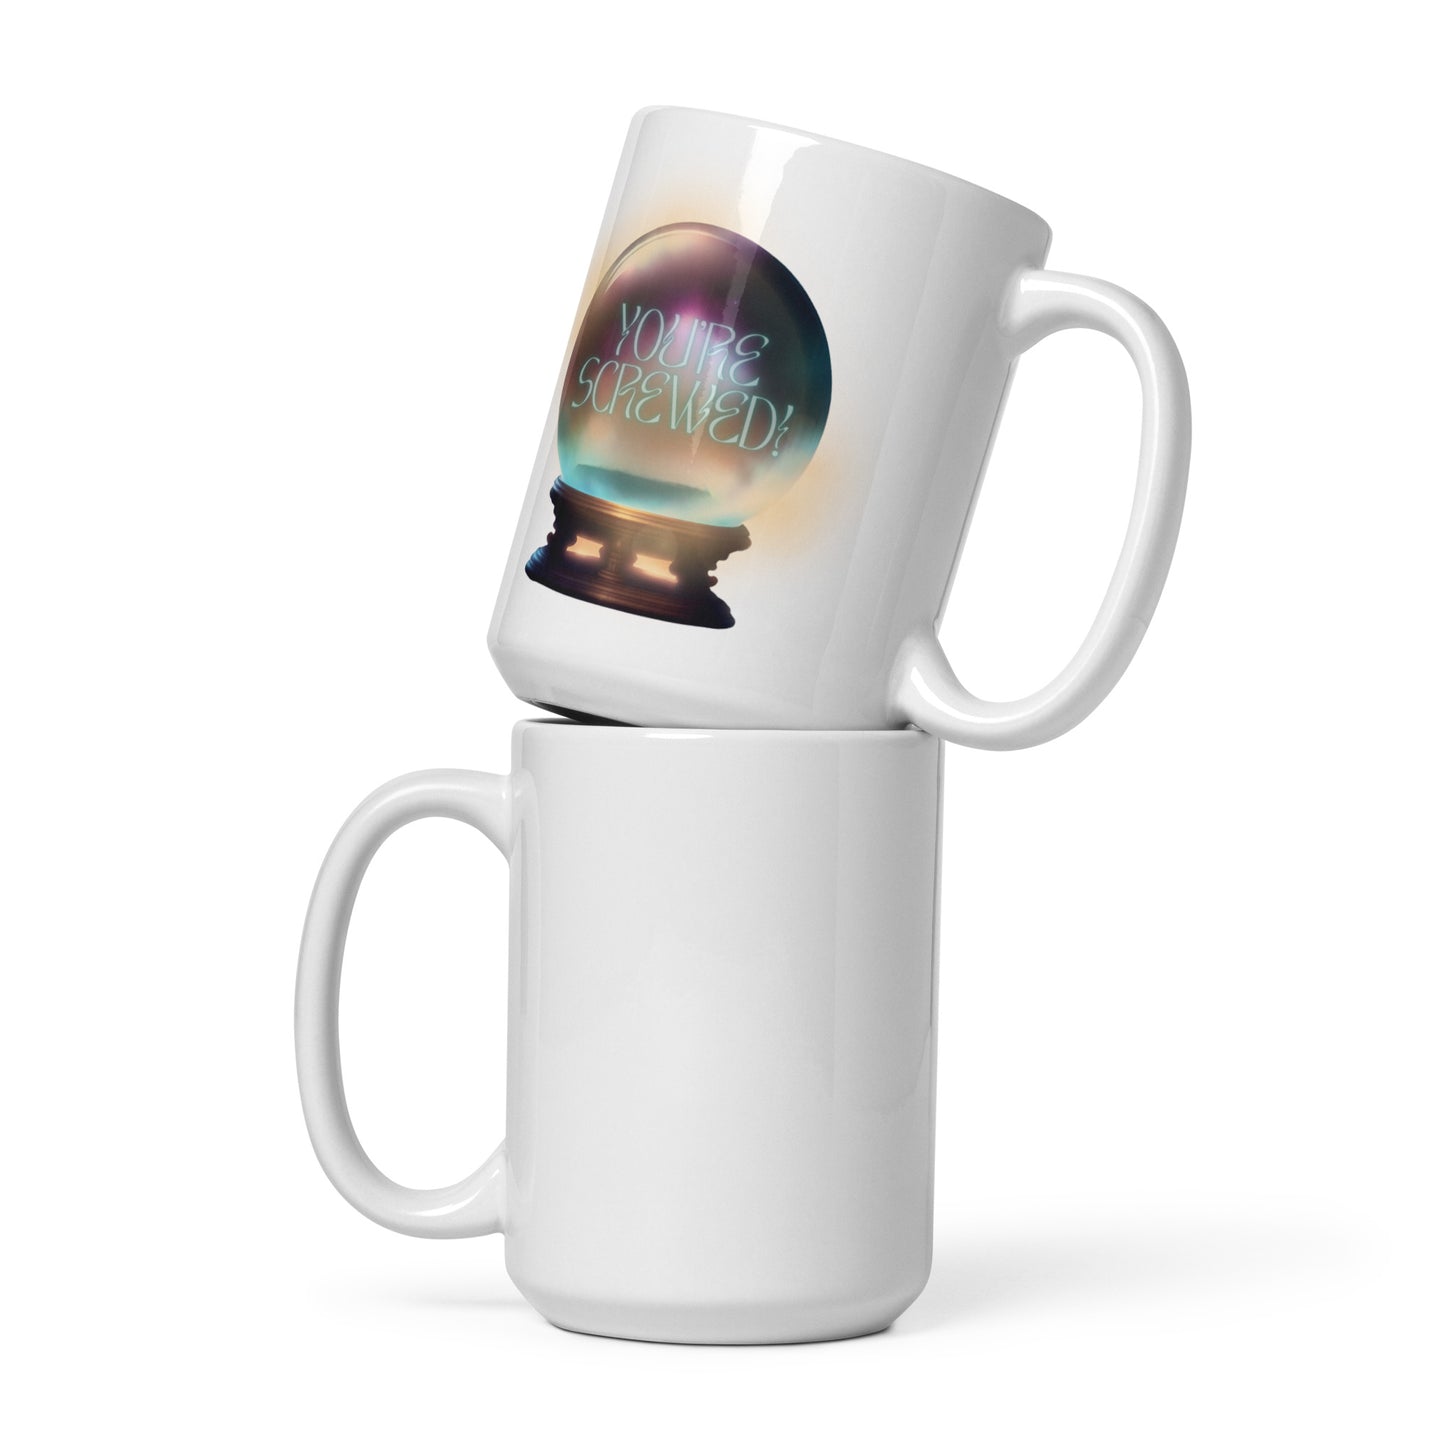 You’re Screwed White glossy mug